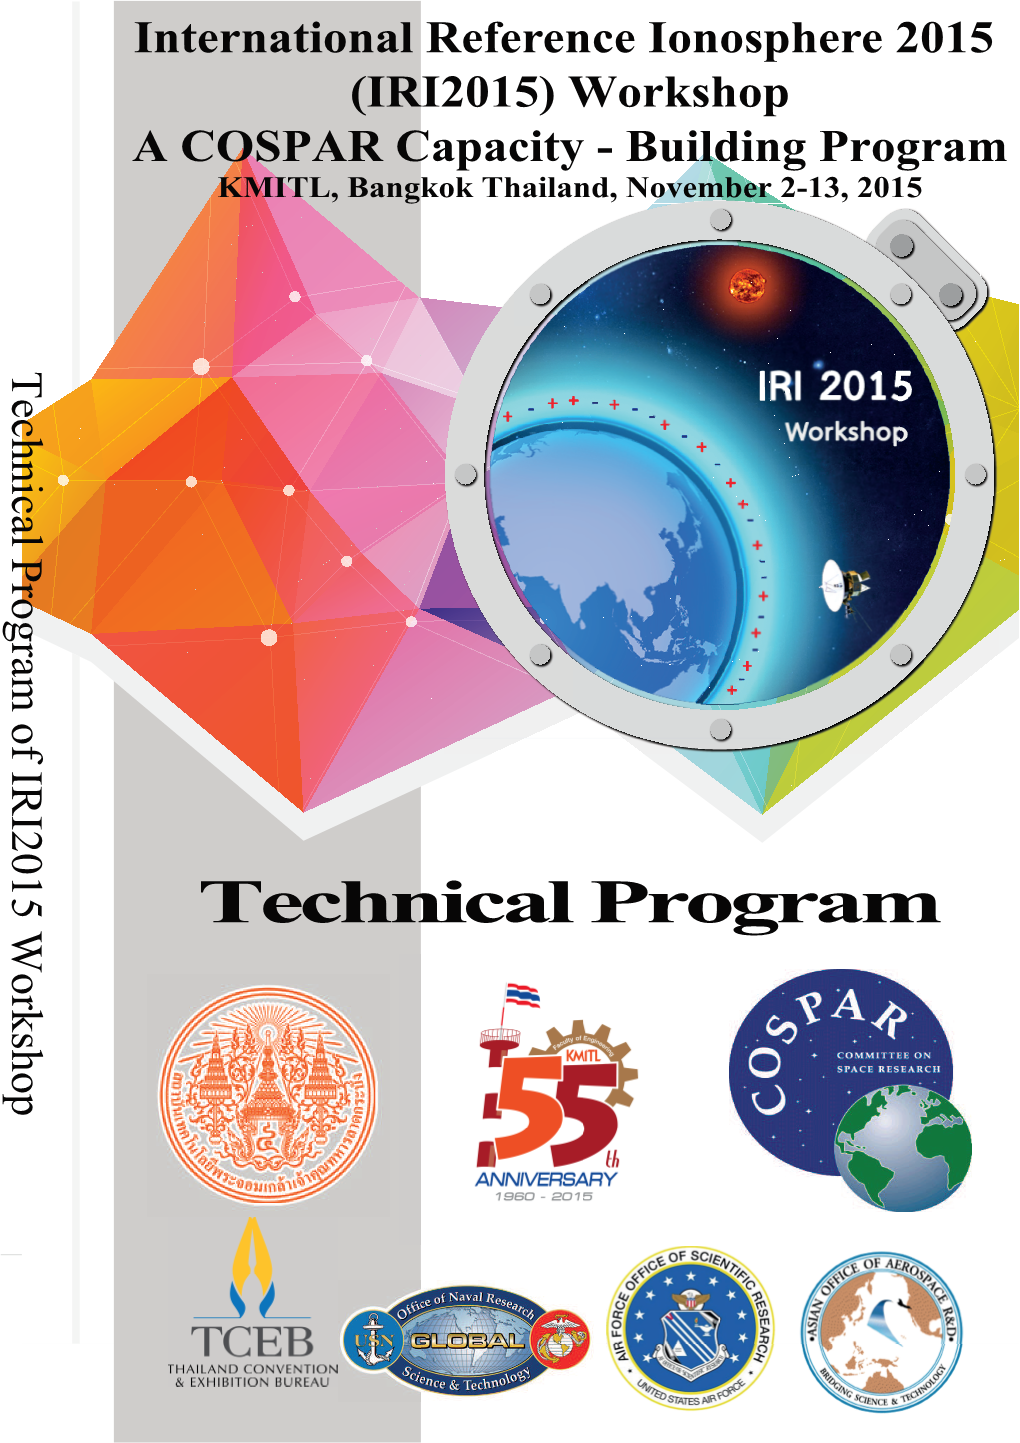 Technical Program